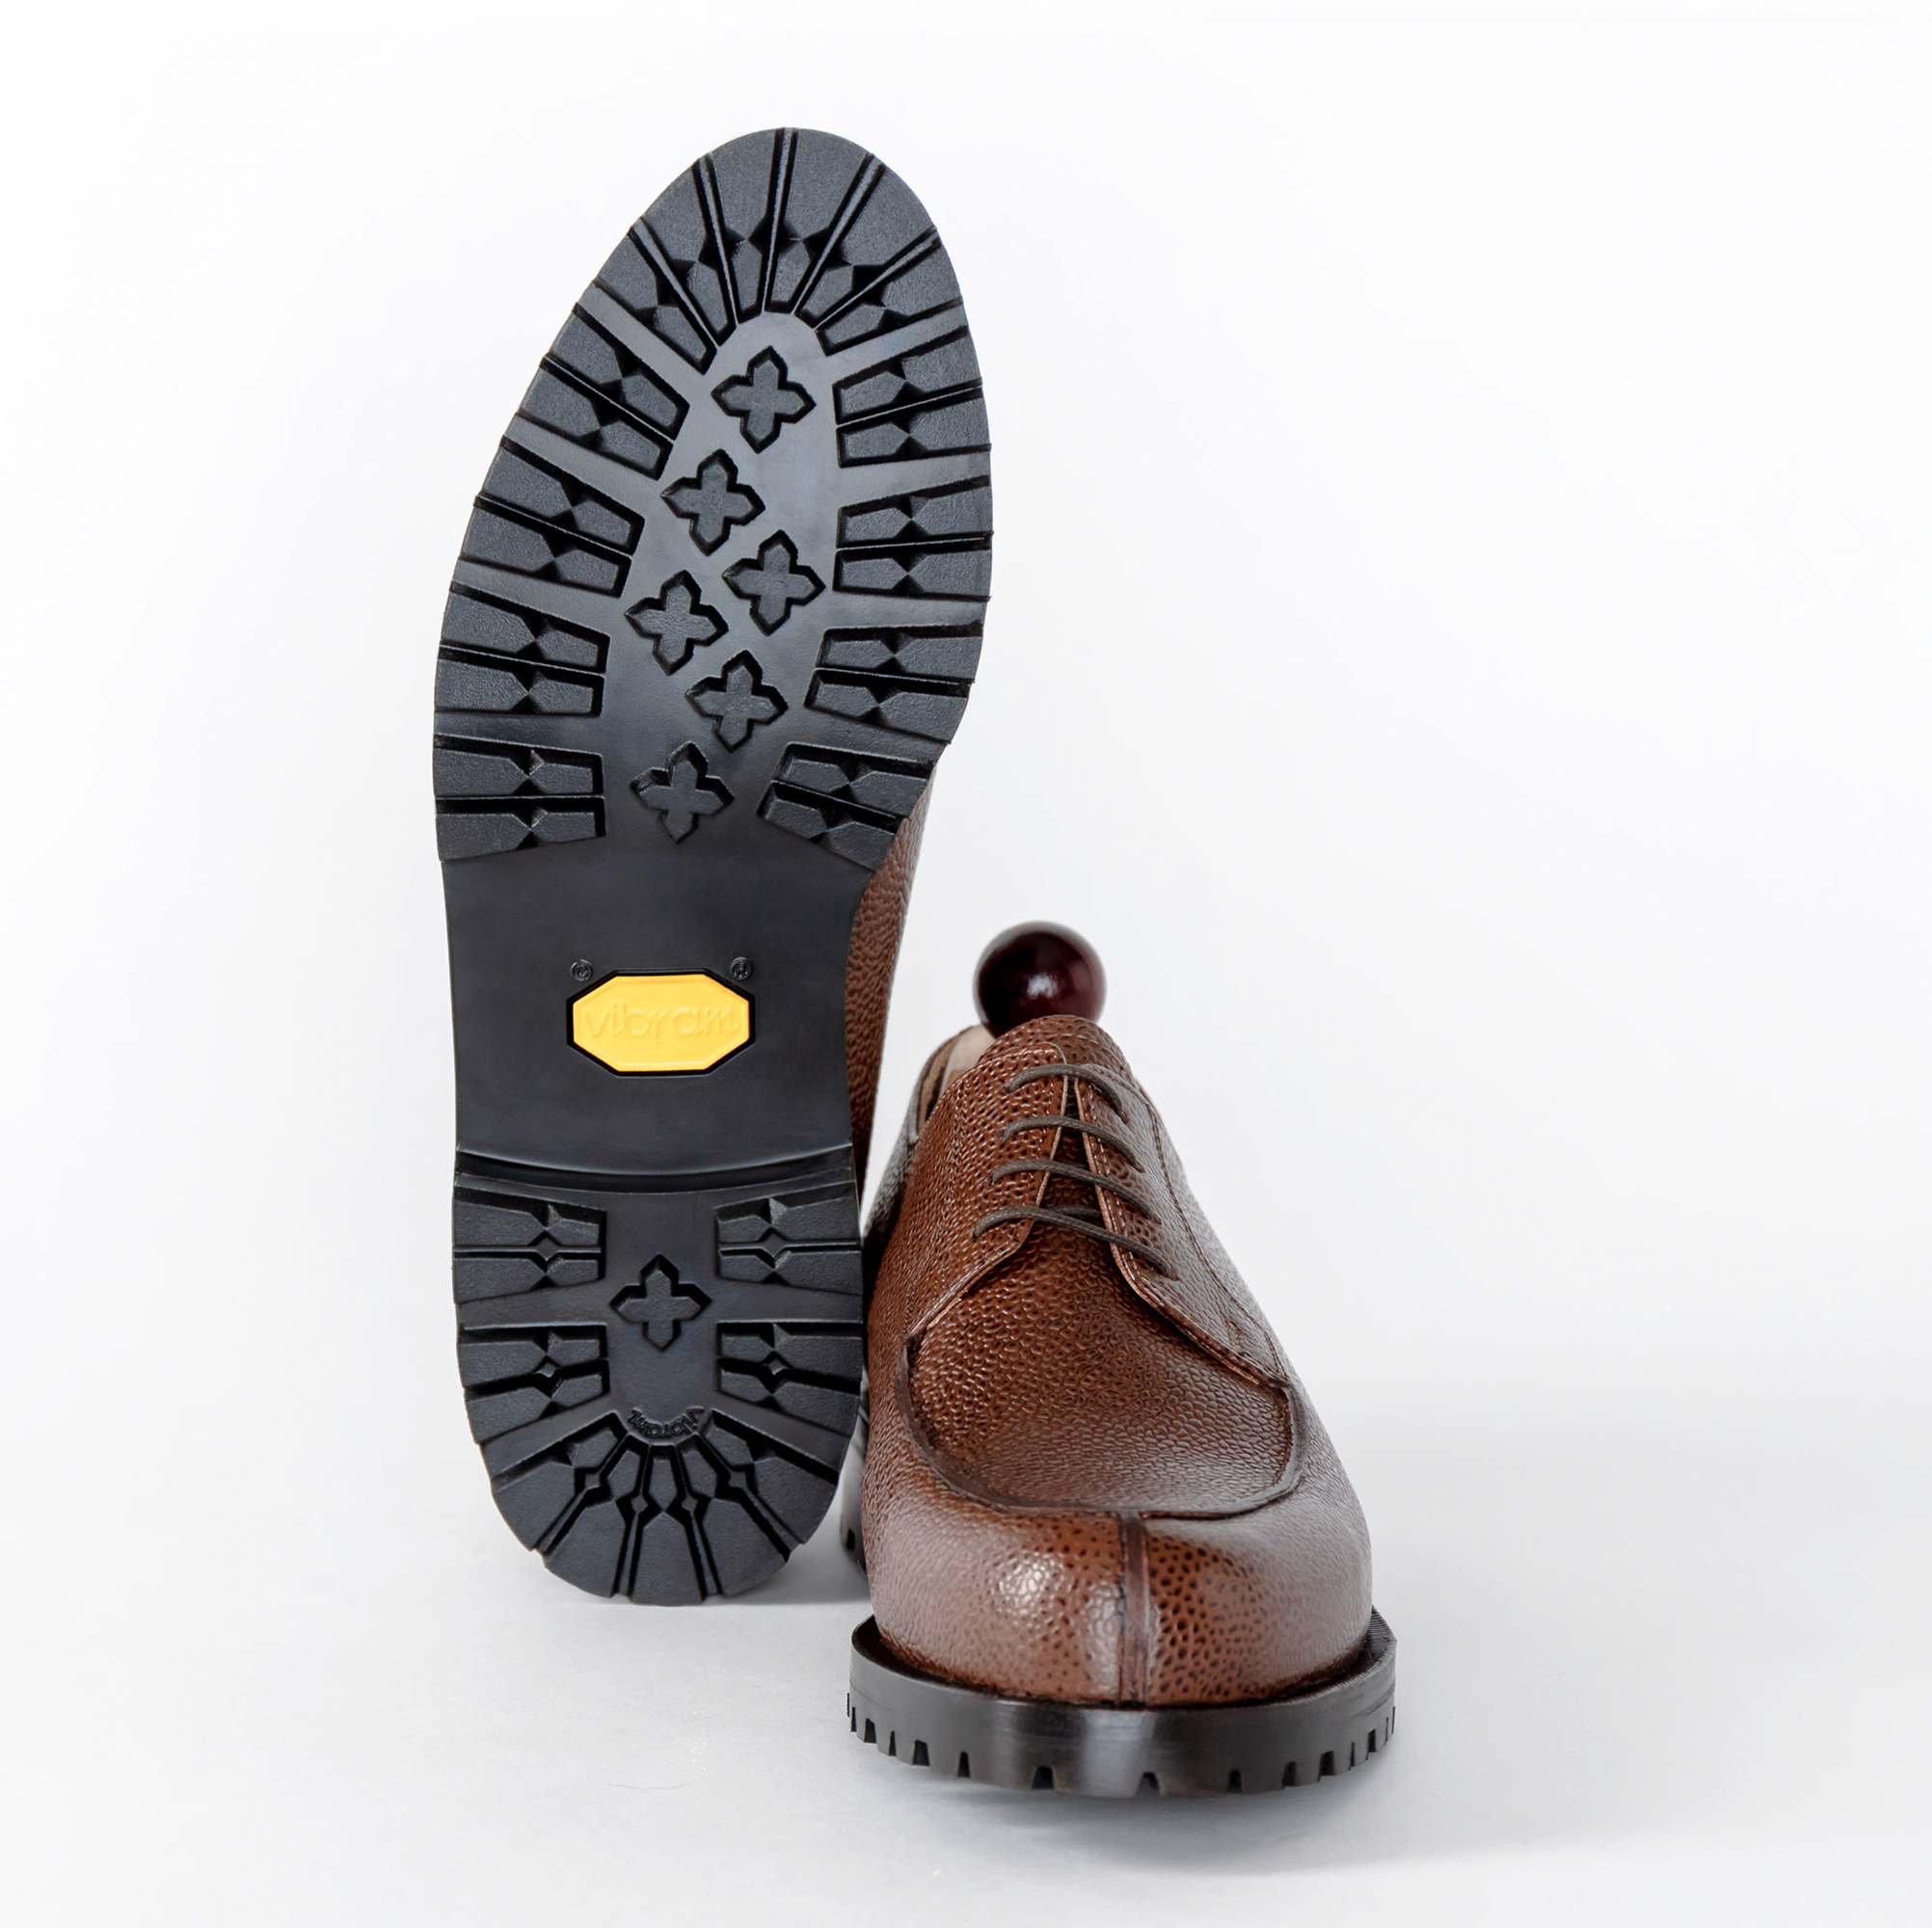 Herrenschuhe - Michael & Albina Exklusive Schuhe - Online Shop